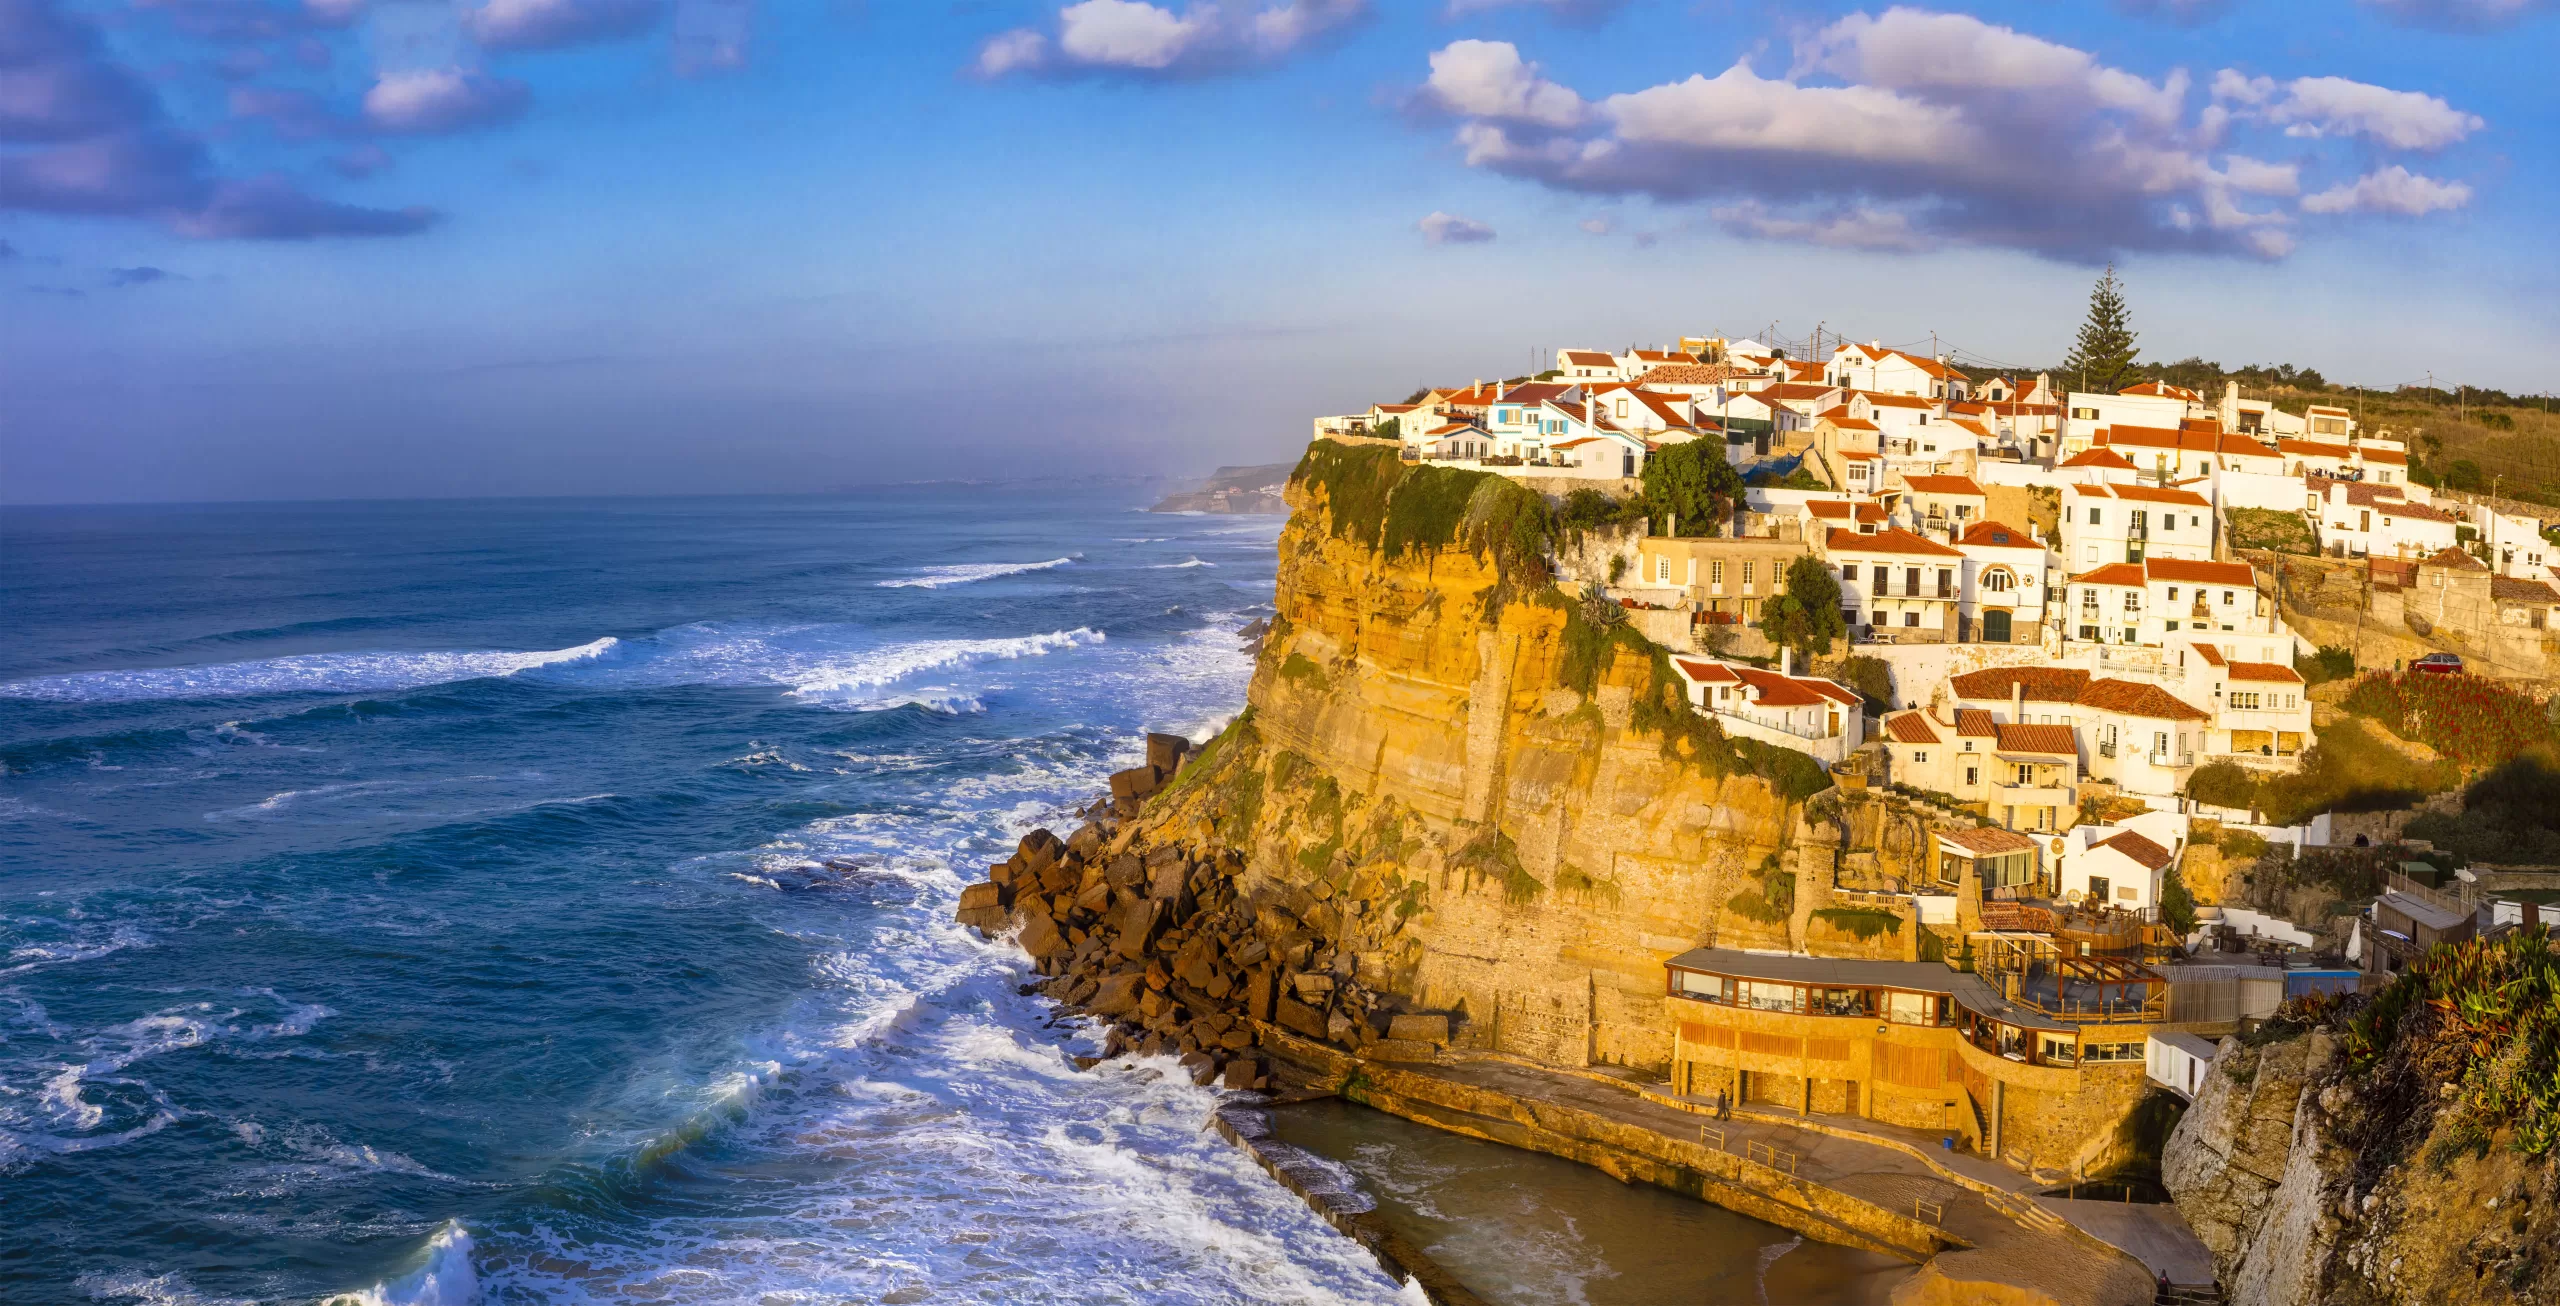 azenhas-do-mar-pictorial-coastal-village-on-the-cliff-in-atlantic-coast-of-portugal